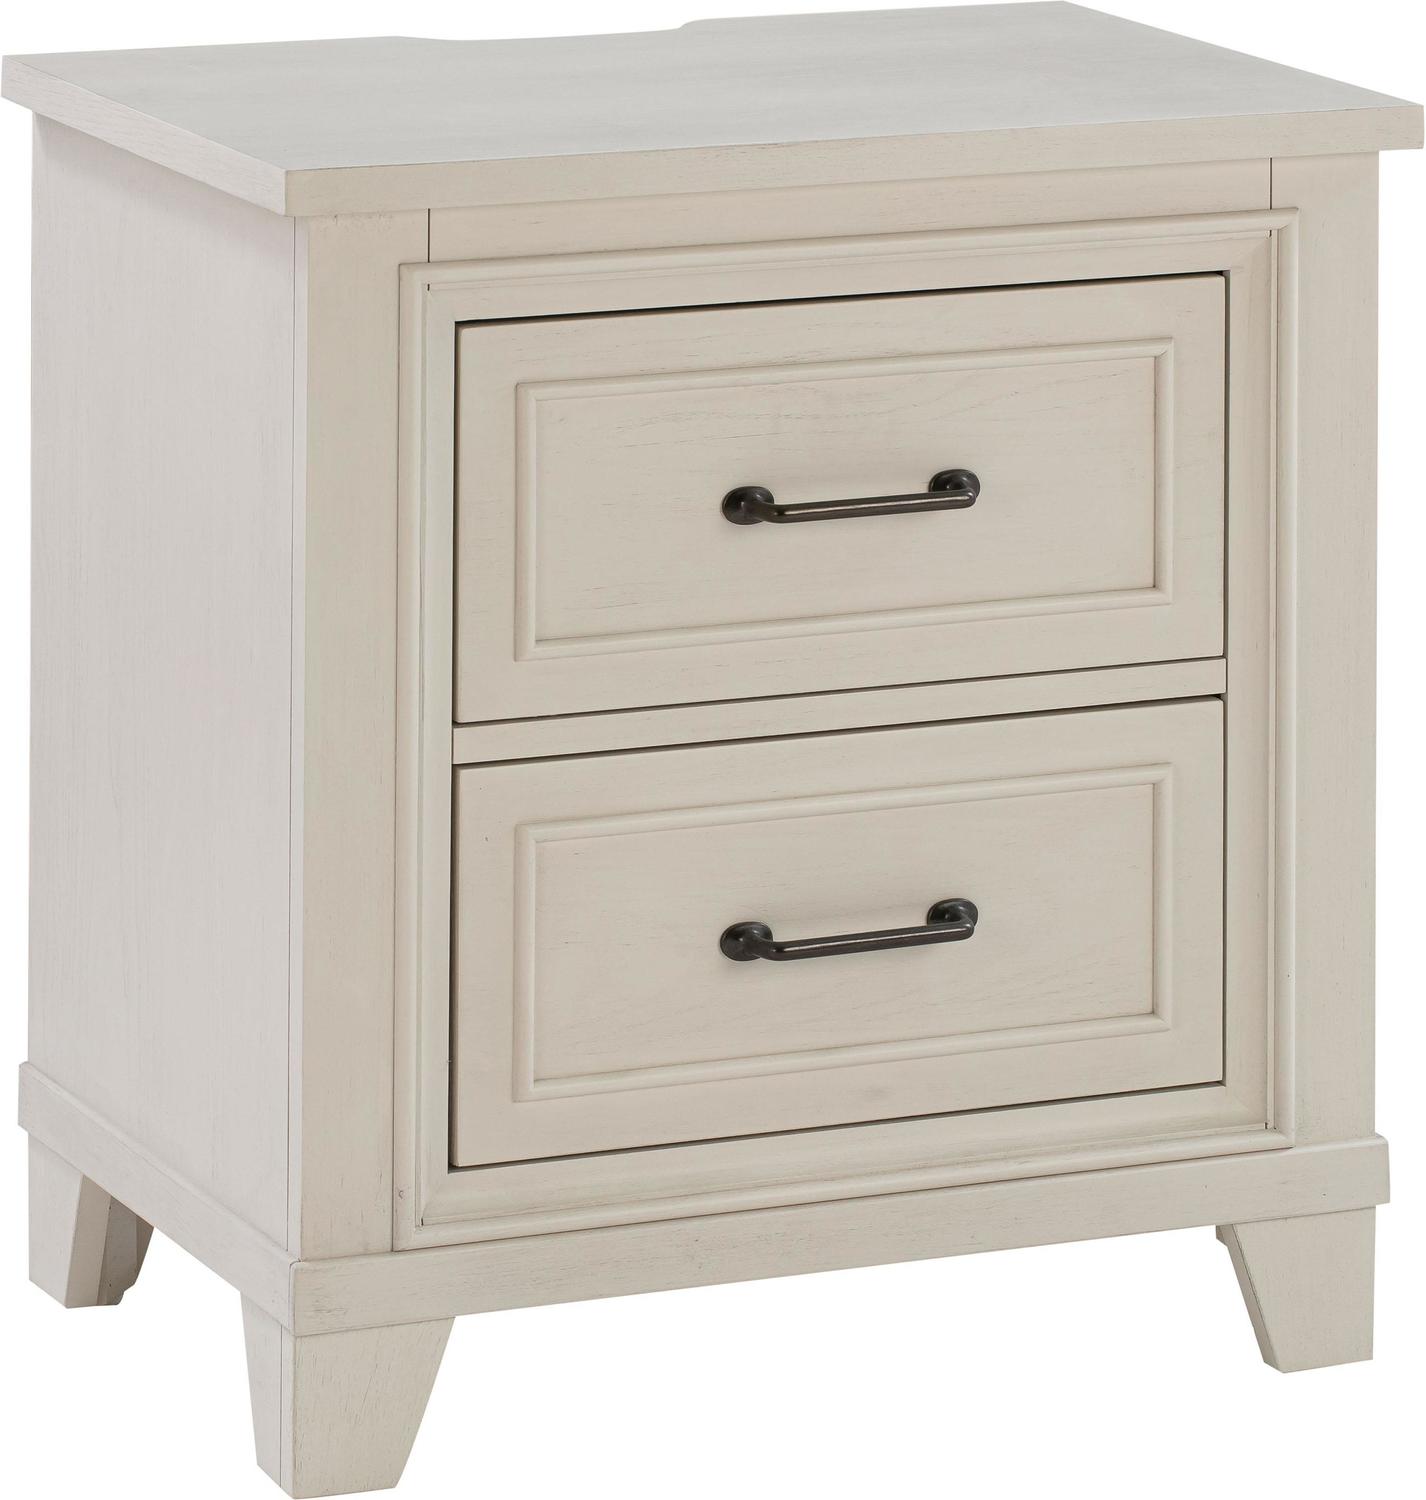 bedside drawers set of 2 Tov Furniture Nightstands White